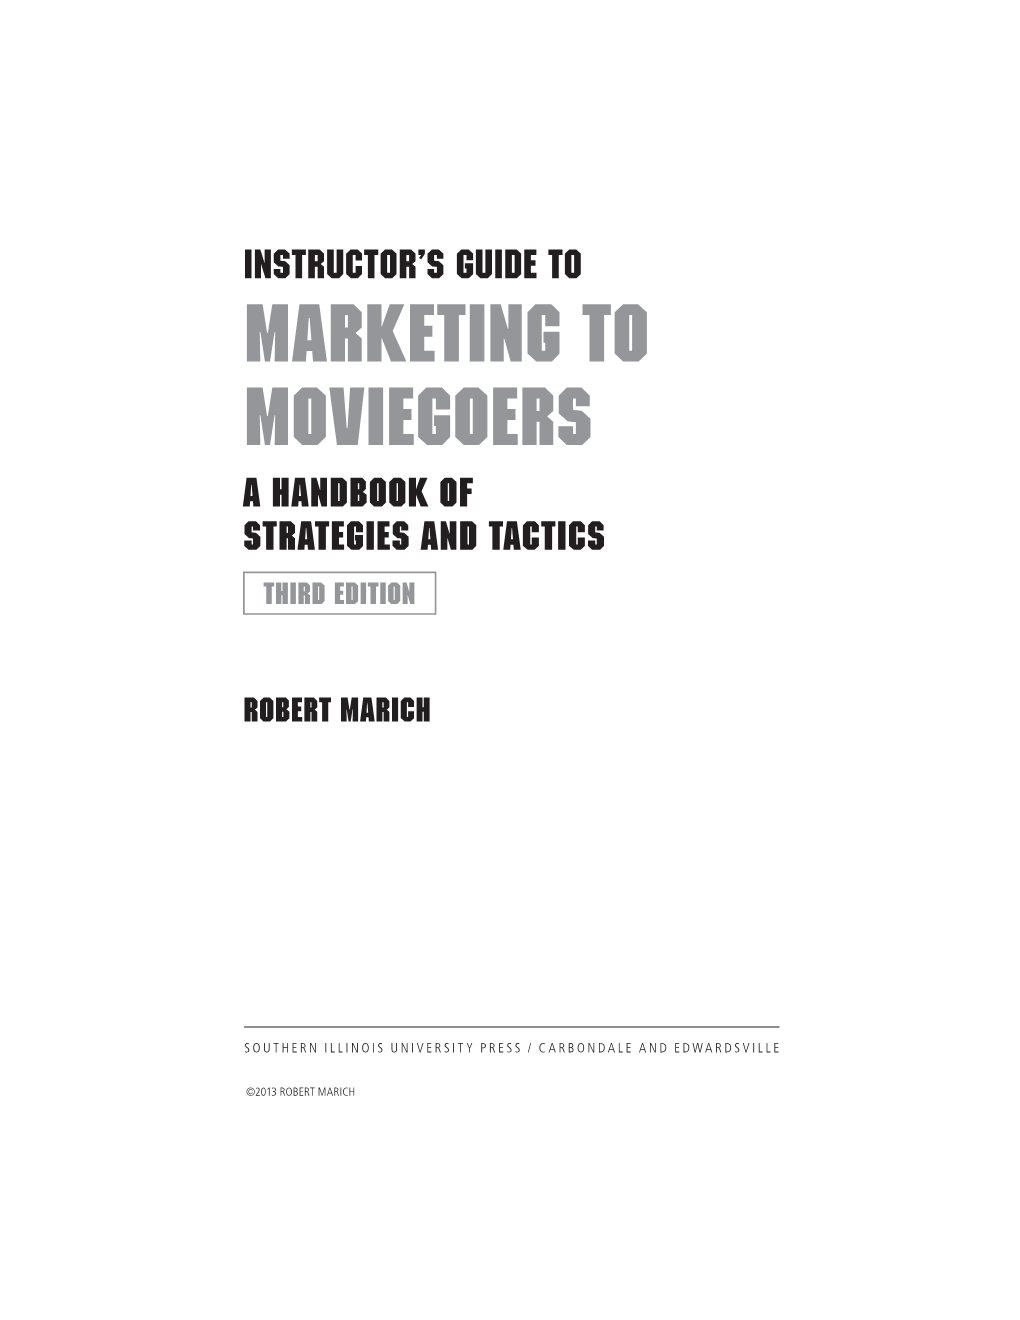 Marketing to Moviegoers a Handbook of Strategies and Tactics THIRD Edition